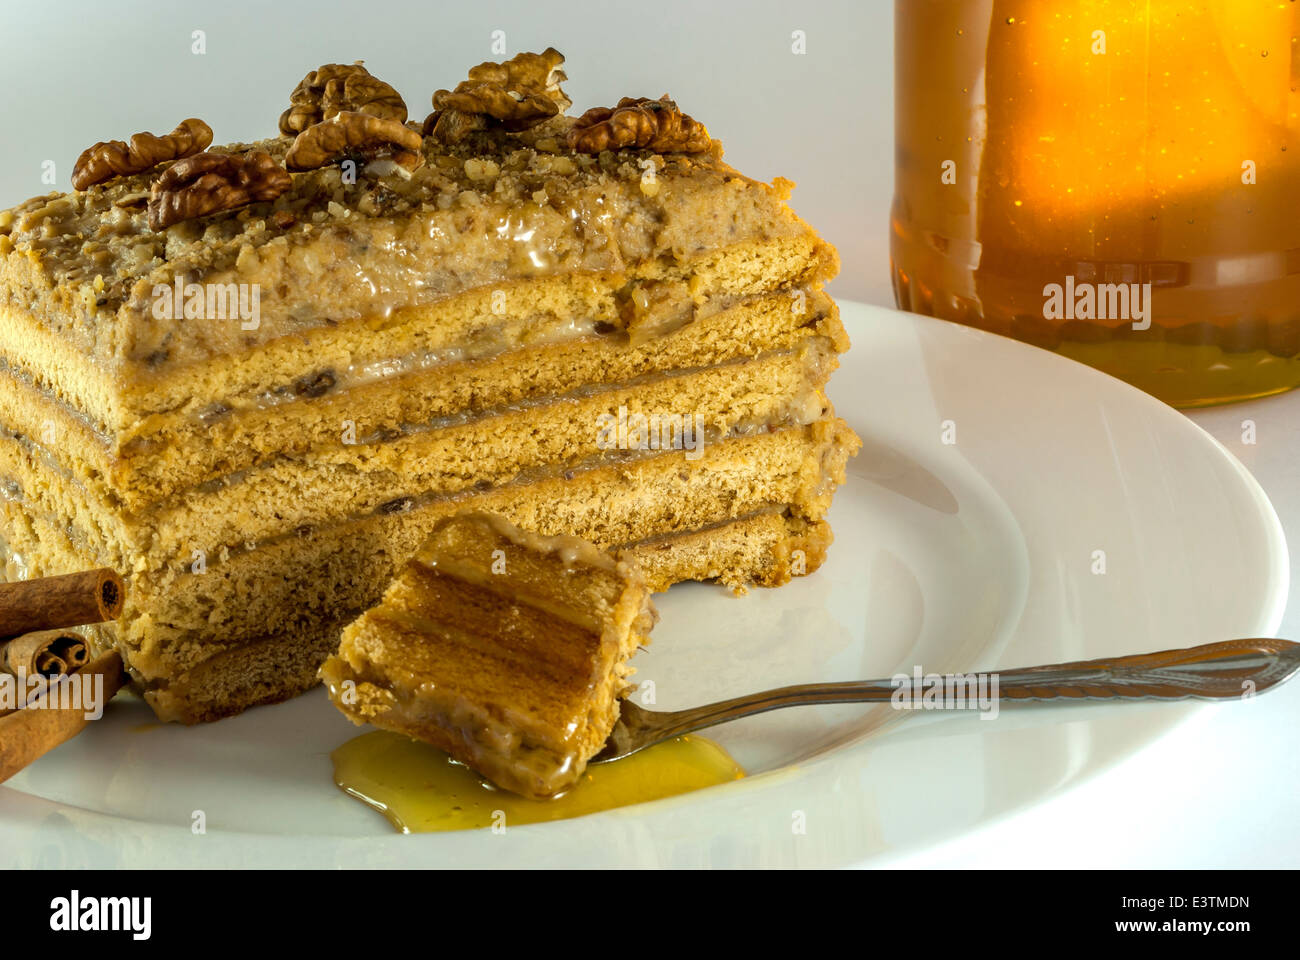 Armenia honey cake marlenka on white plate Stock Photo